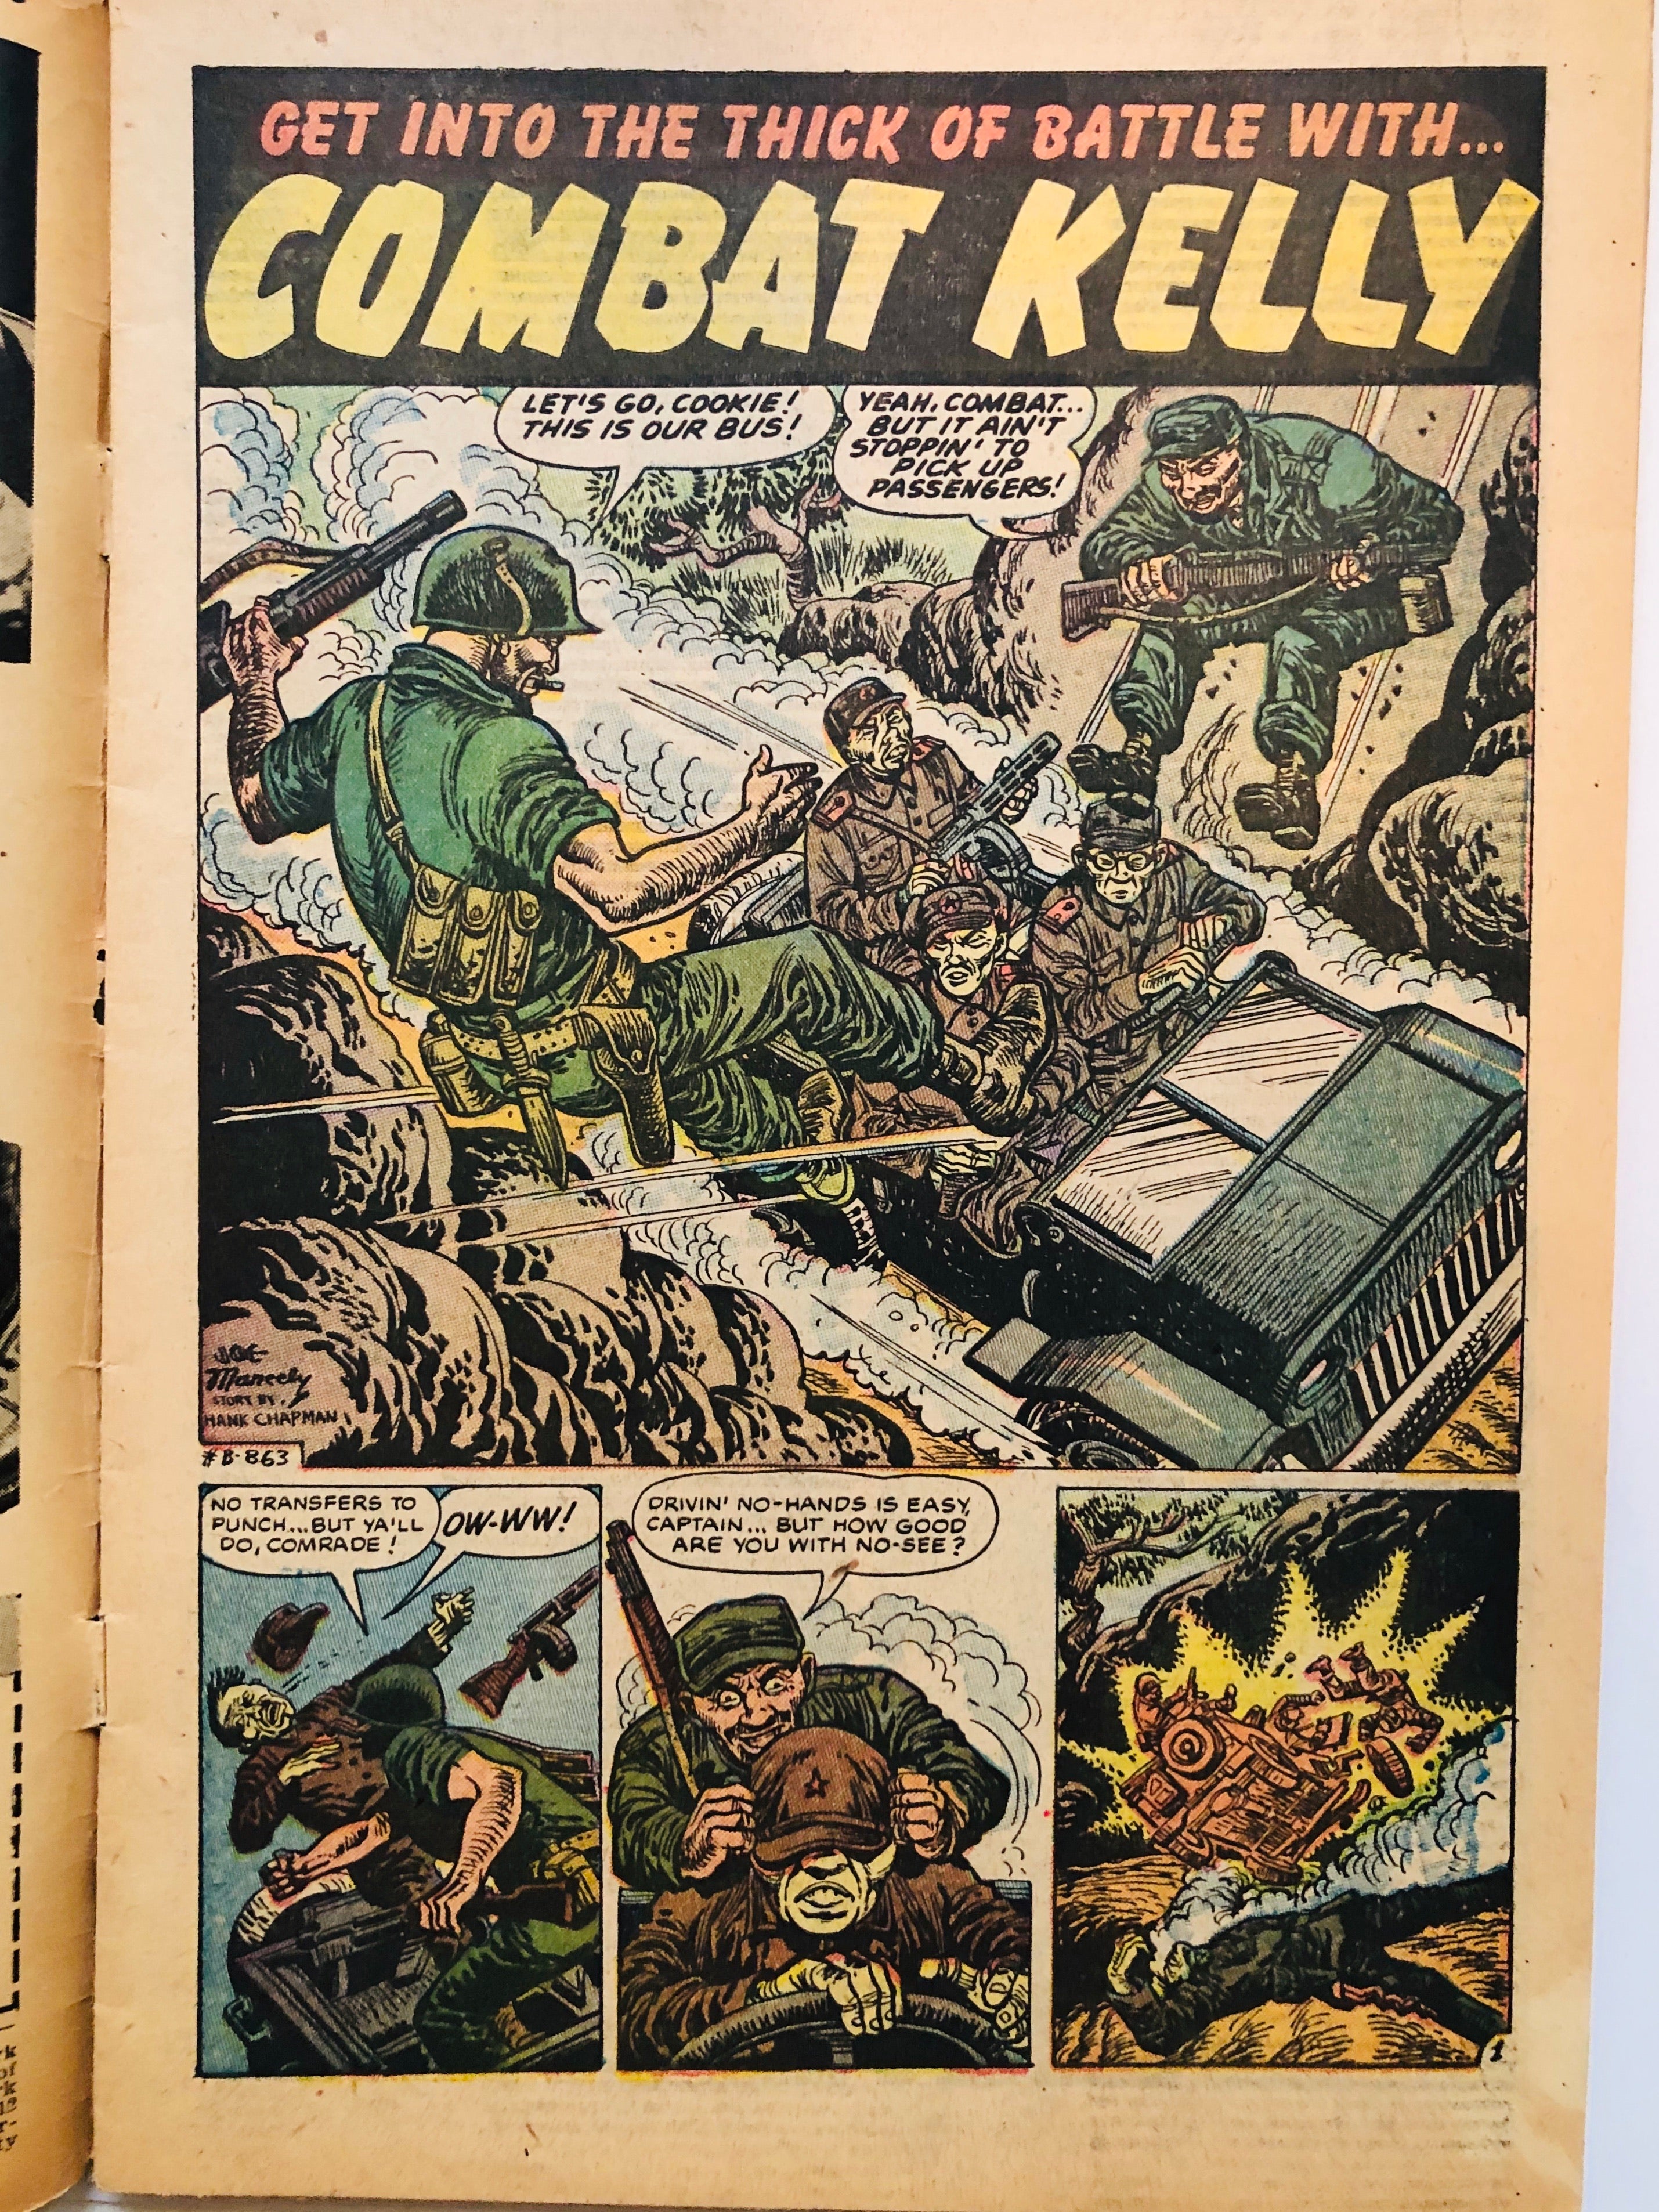 1952 Combat Kelly war rare comic book